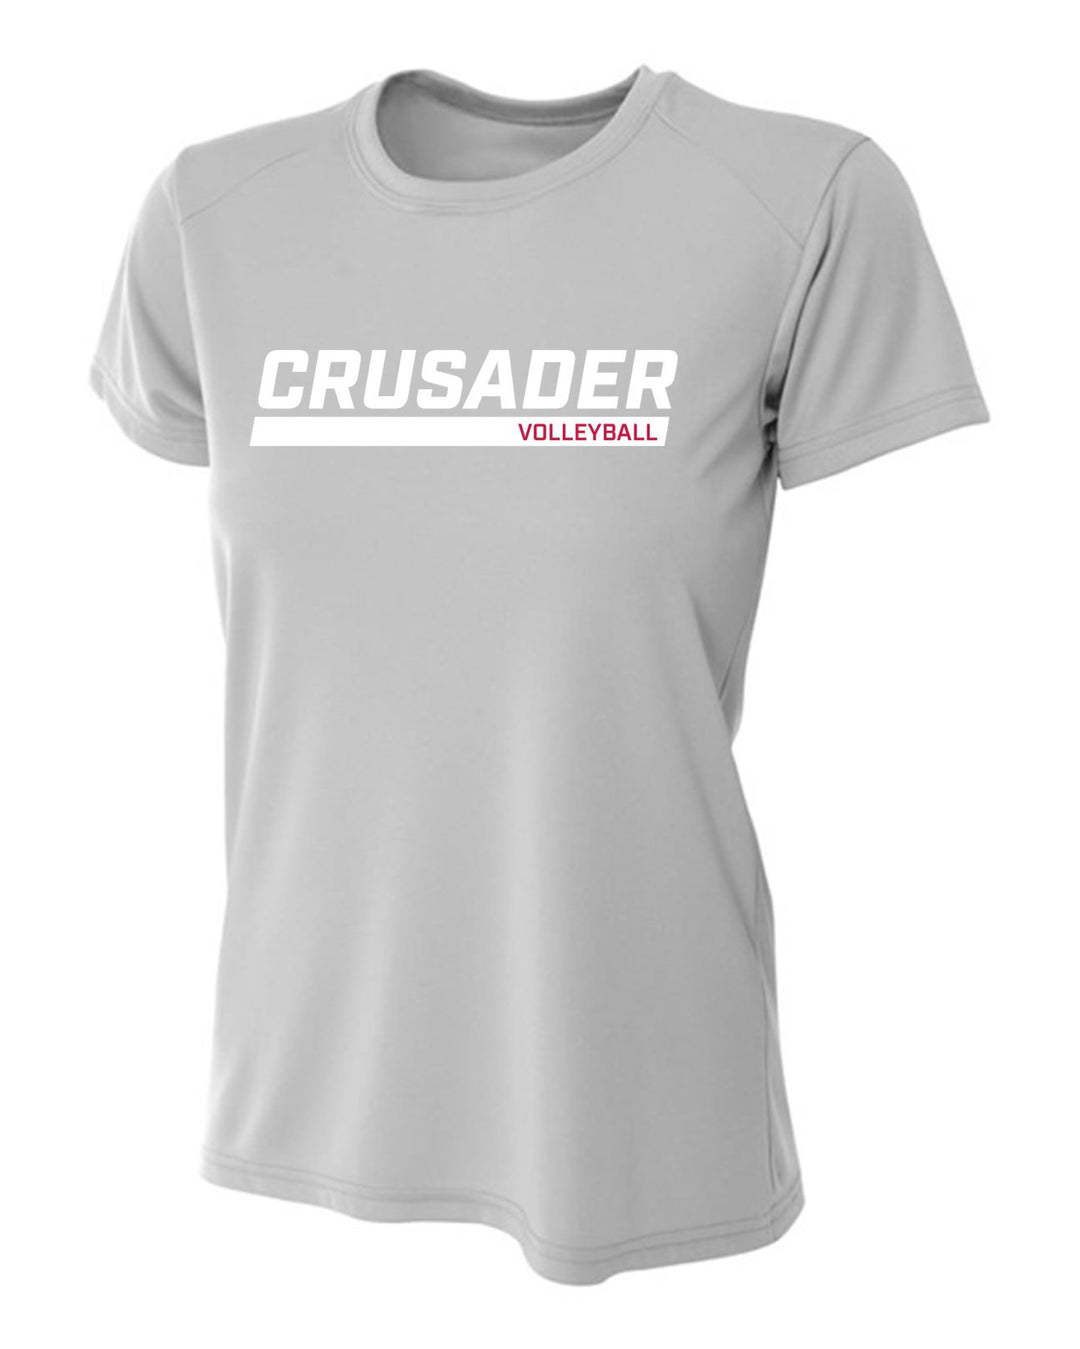 WCU Volleyball Women's Short-Sleeve Performance Shirt WCU Volleyball Silver CRUSADER - Third Coast Soccer